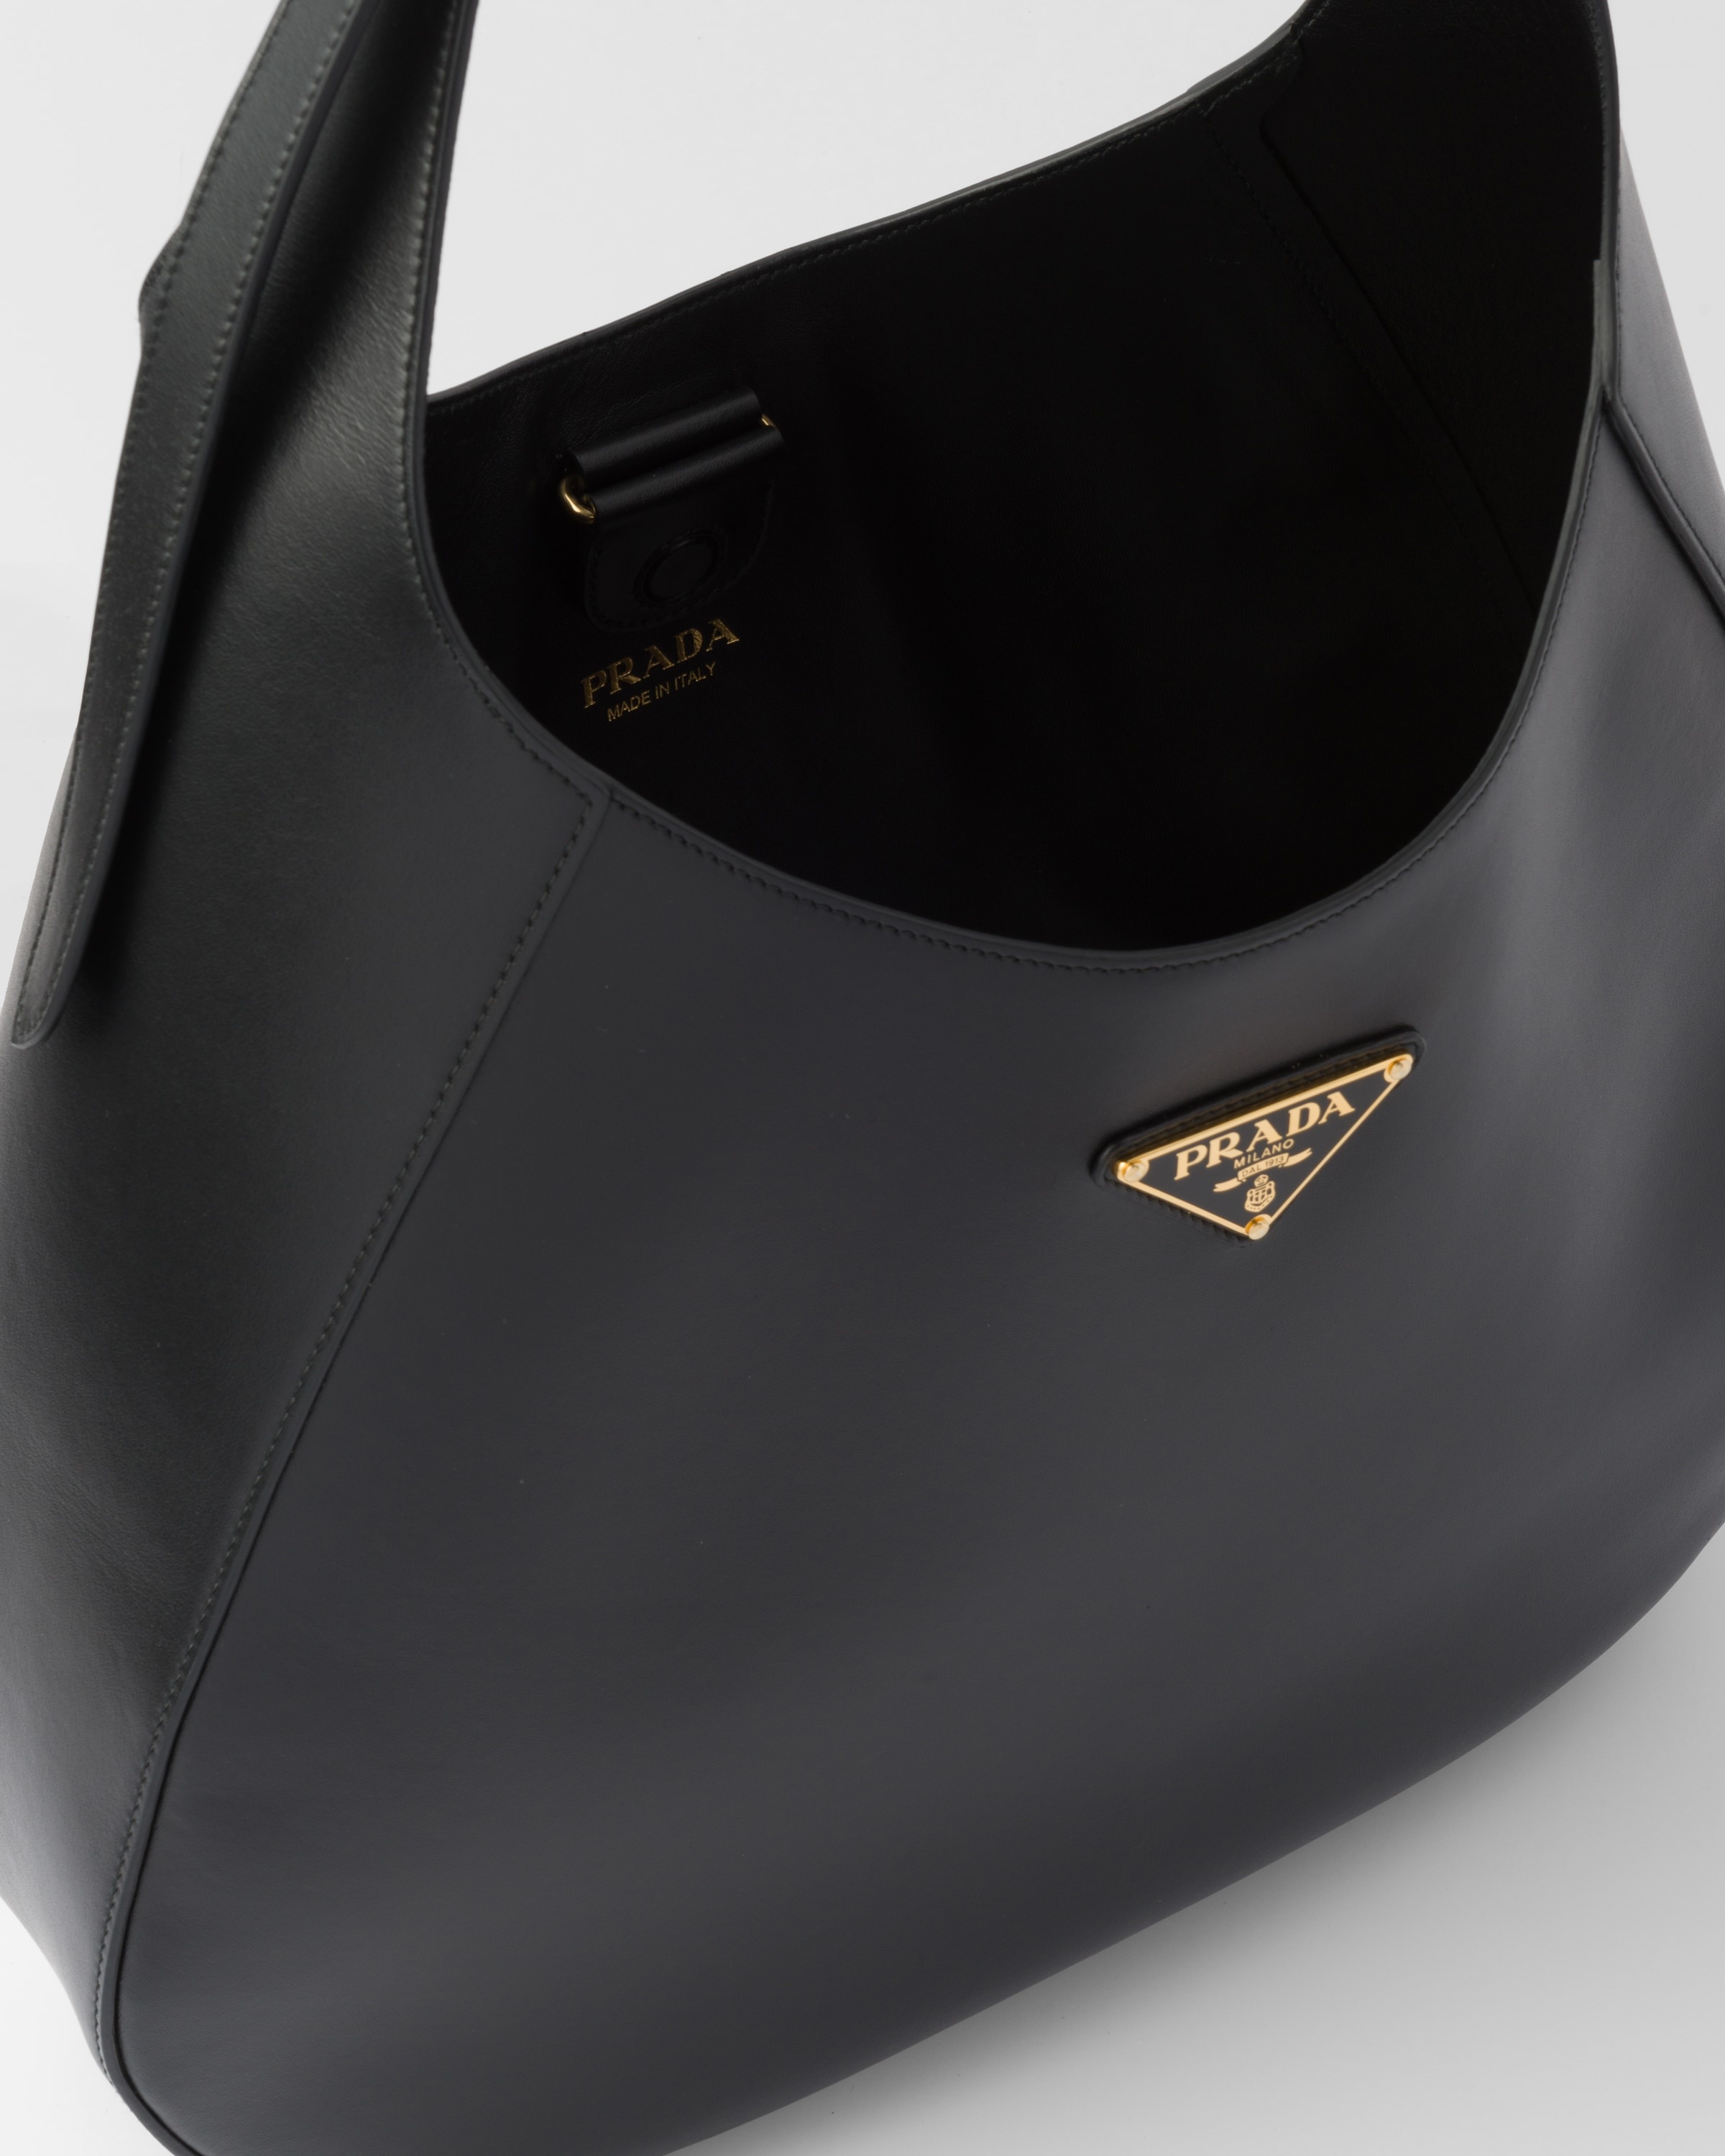 Prada Large leather shoulder bag with topstitching | REVERSIBLE